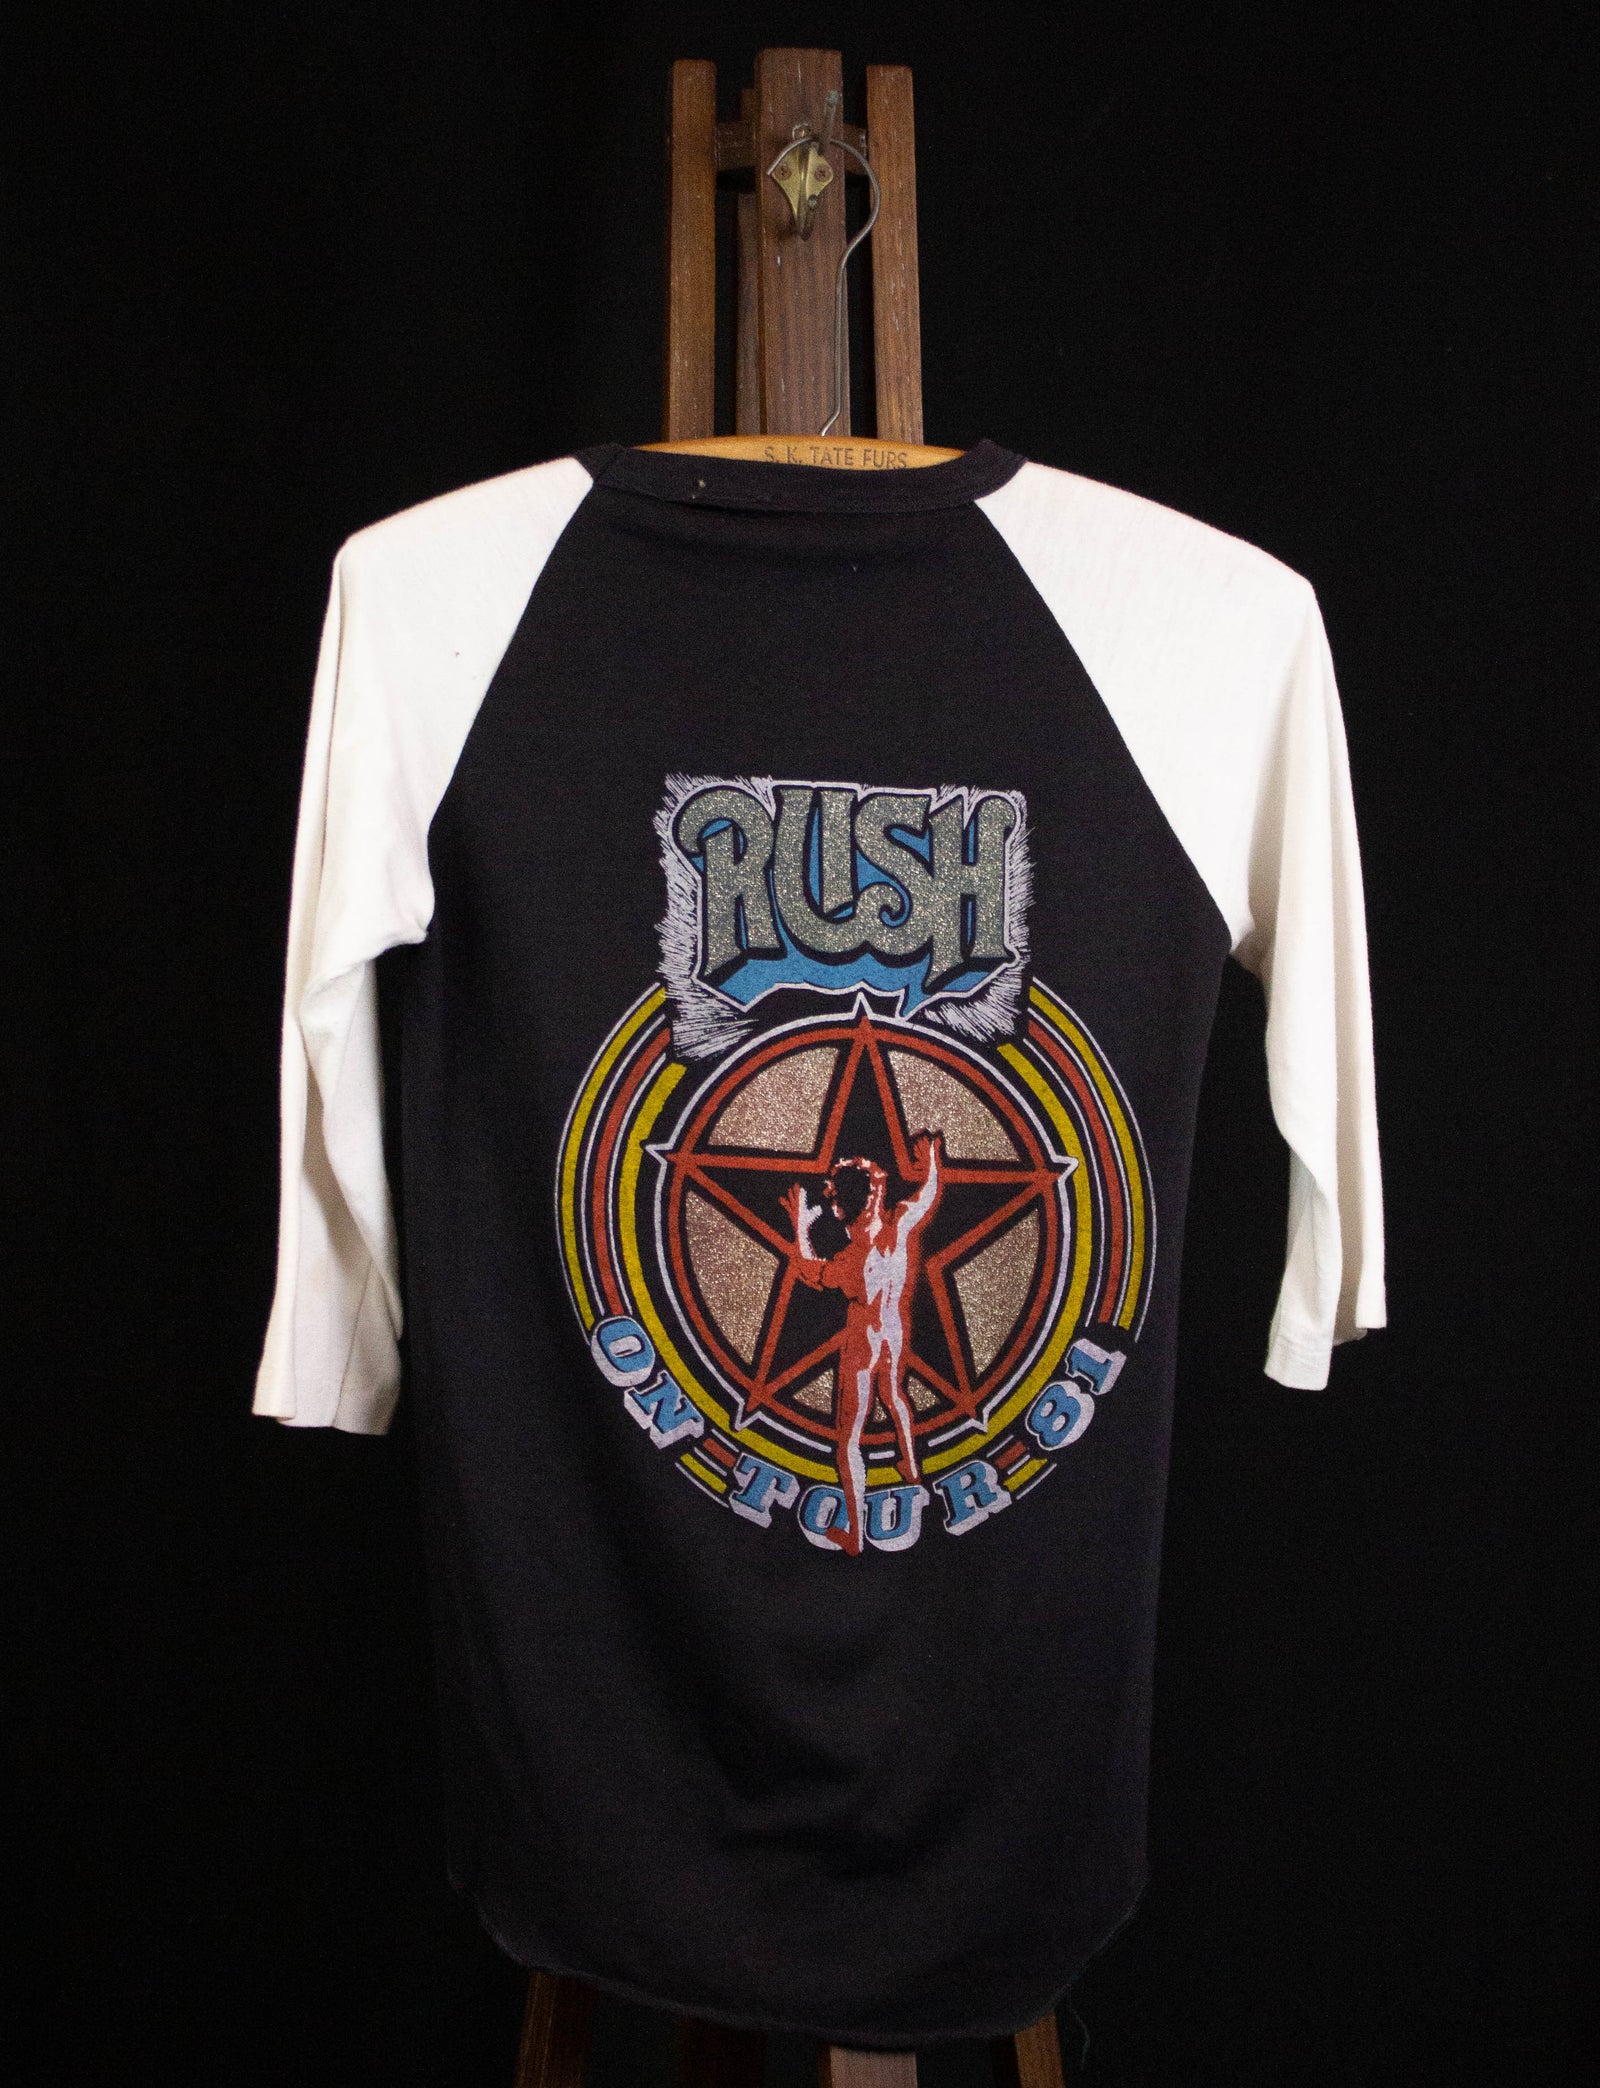 Vintage Rush On Tour 1981 Raglan Concert T Shirt Black and White